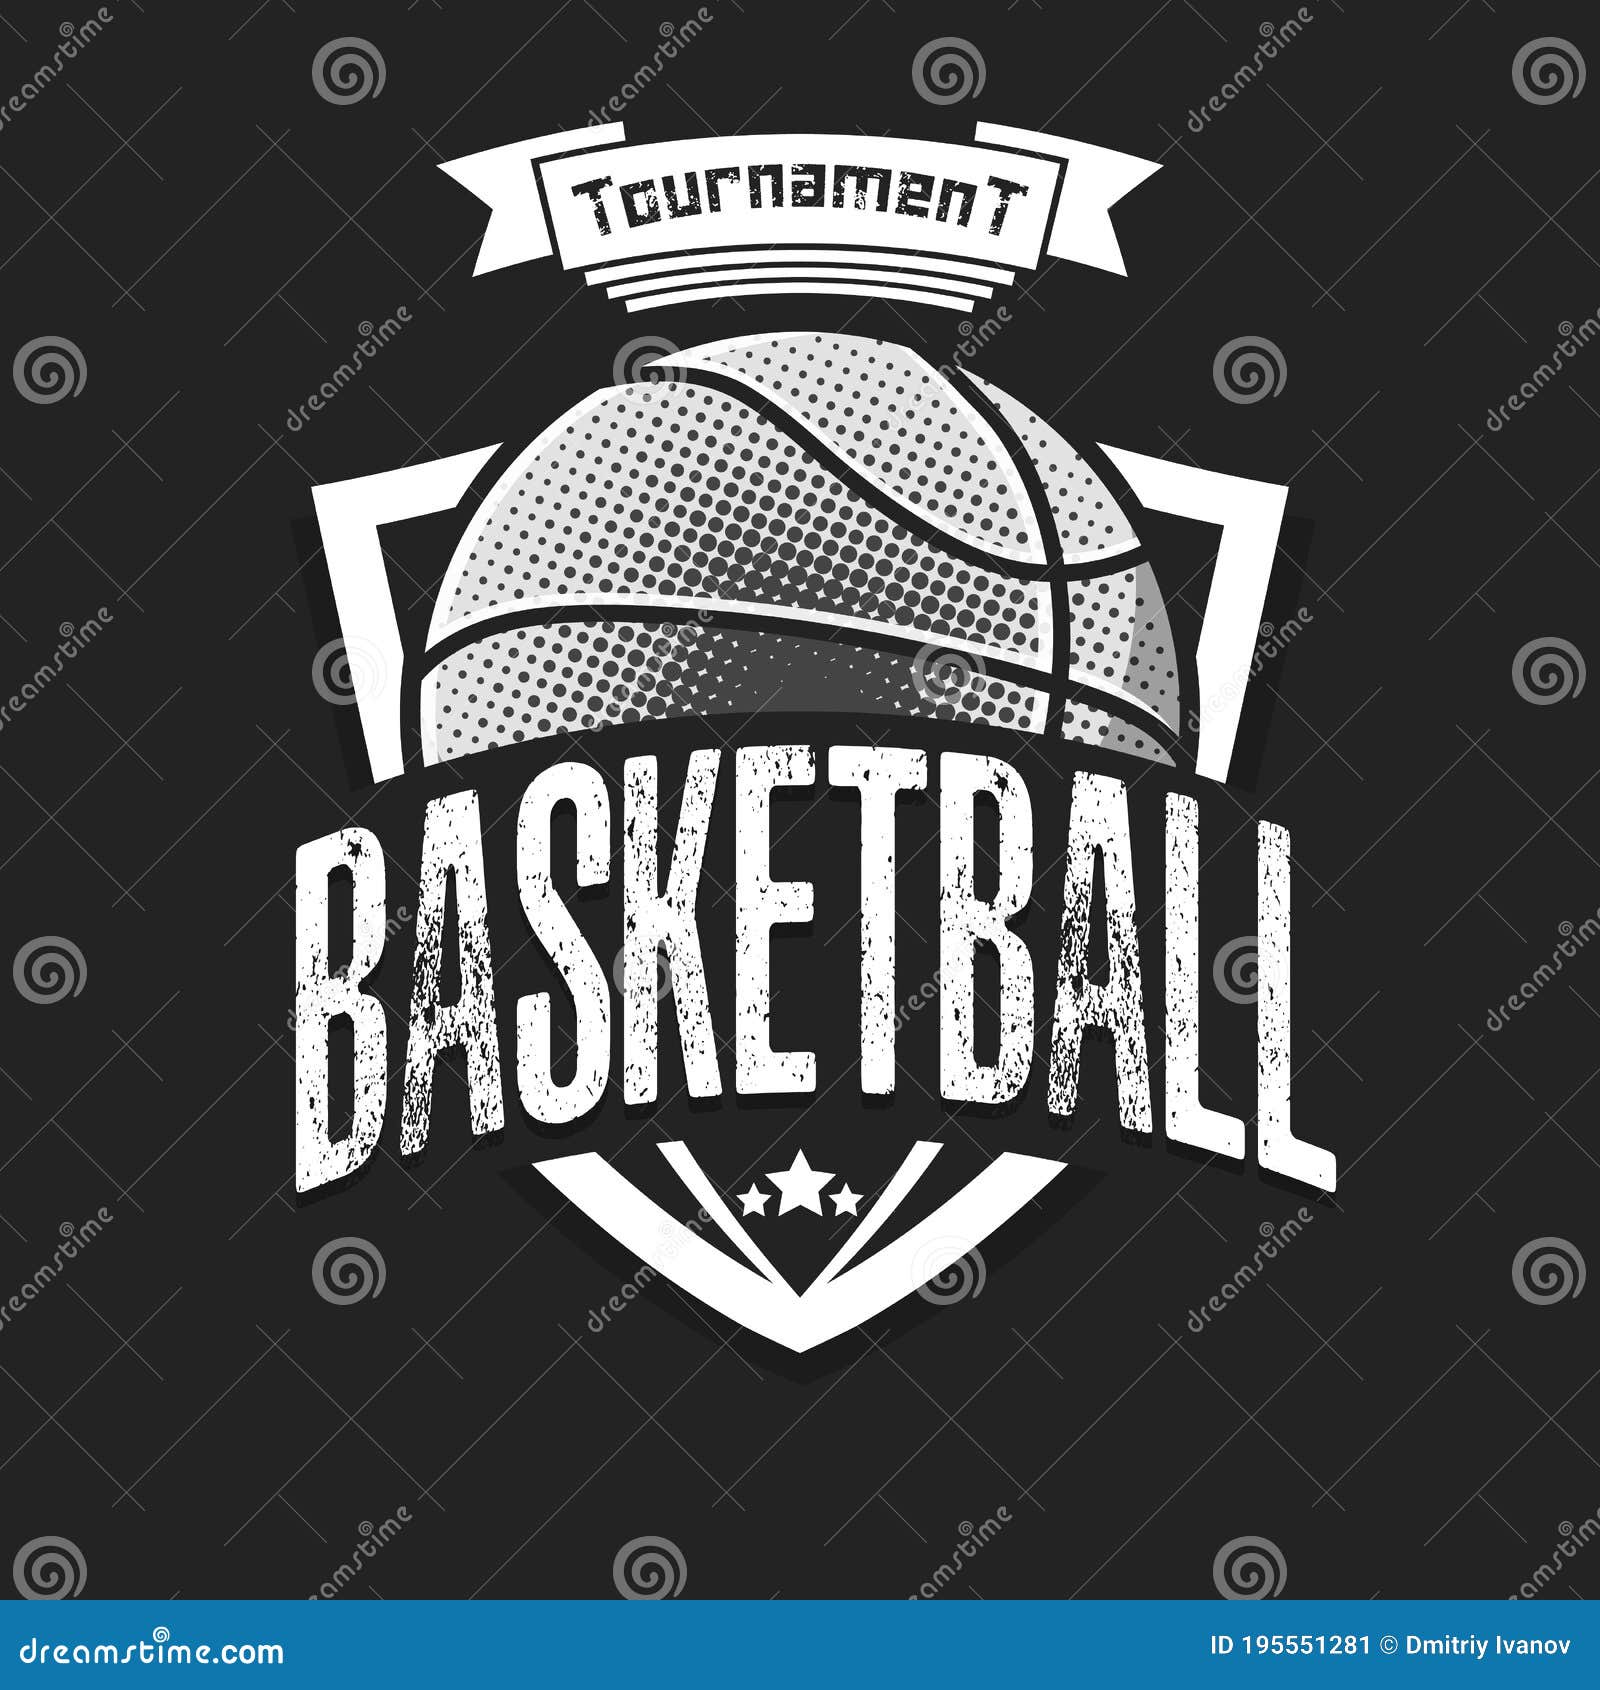 Best Basketball Logo Design Ideas for Your Business- Academy